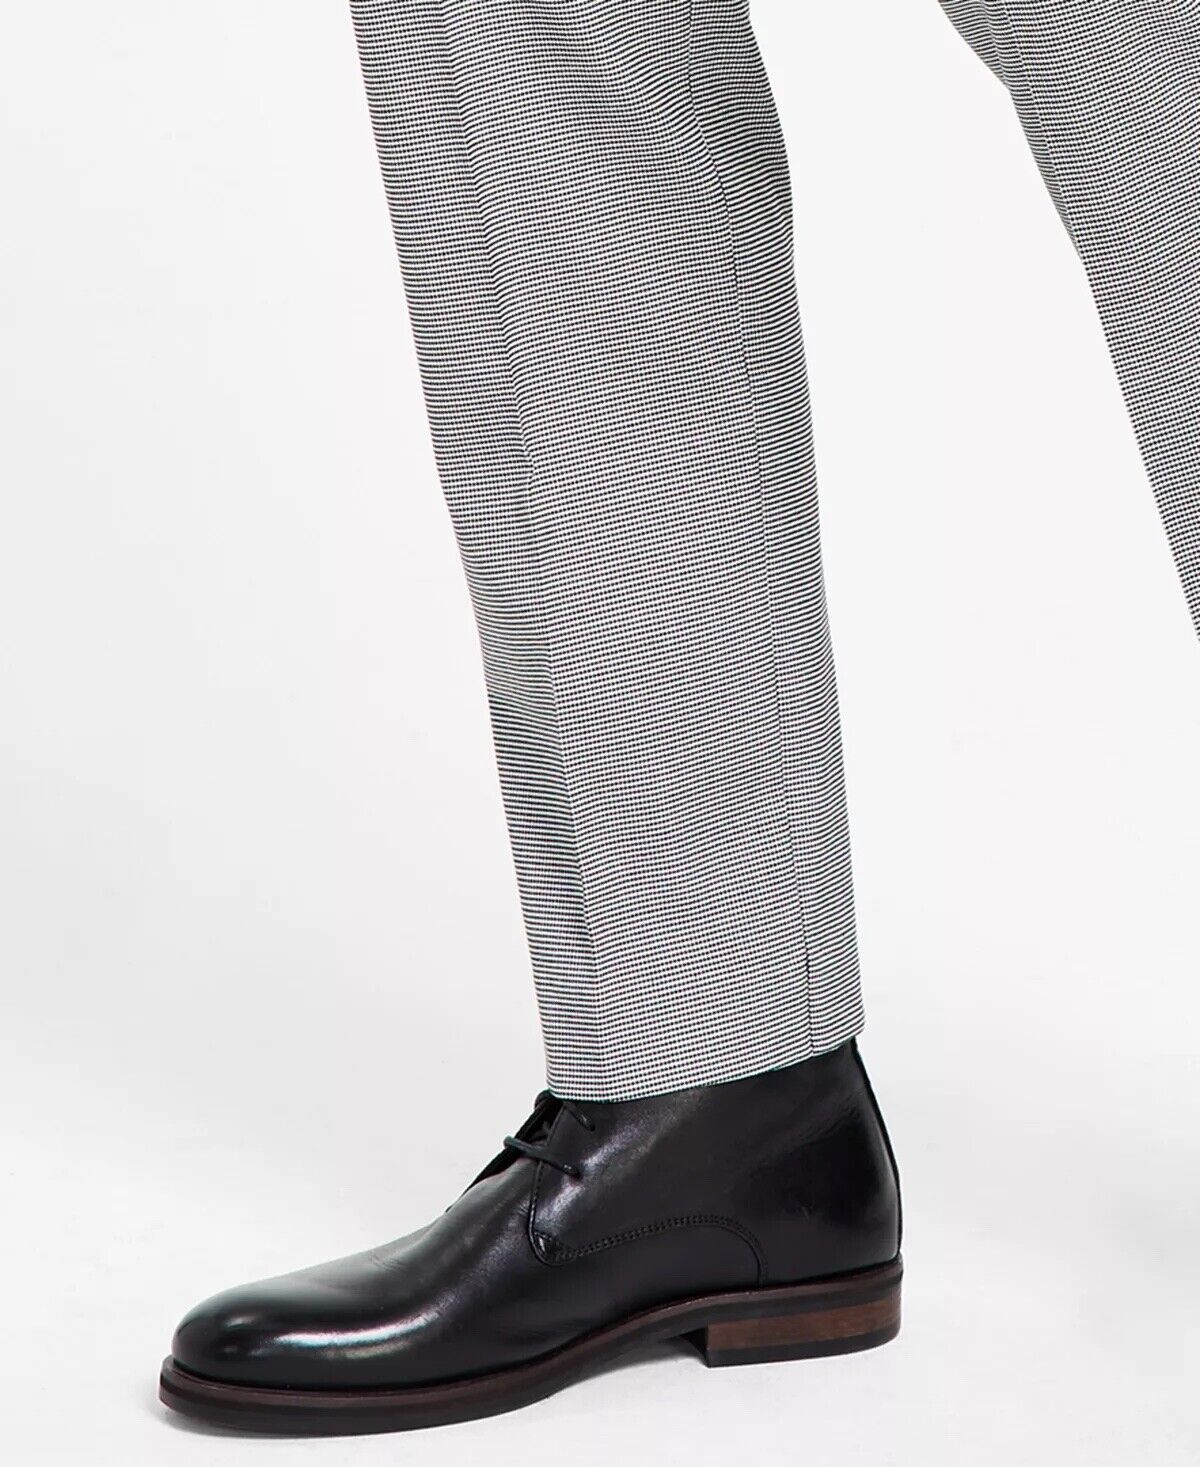 ALFANI Men's Suit Dress Pants 33 x 30 Slim-Fit Black & White Pattern